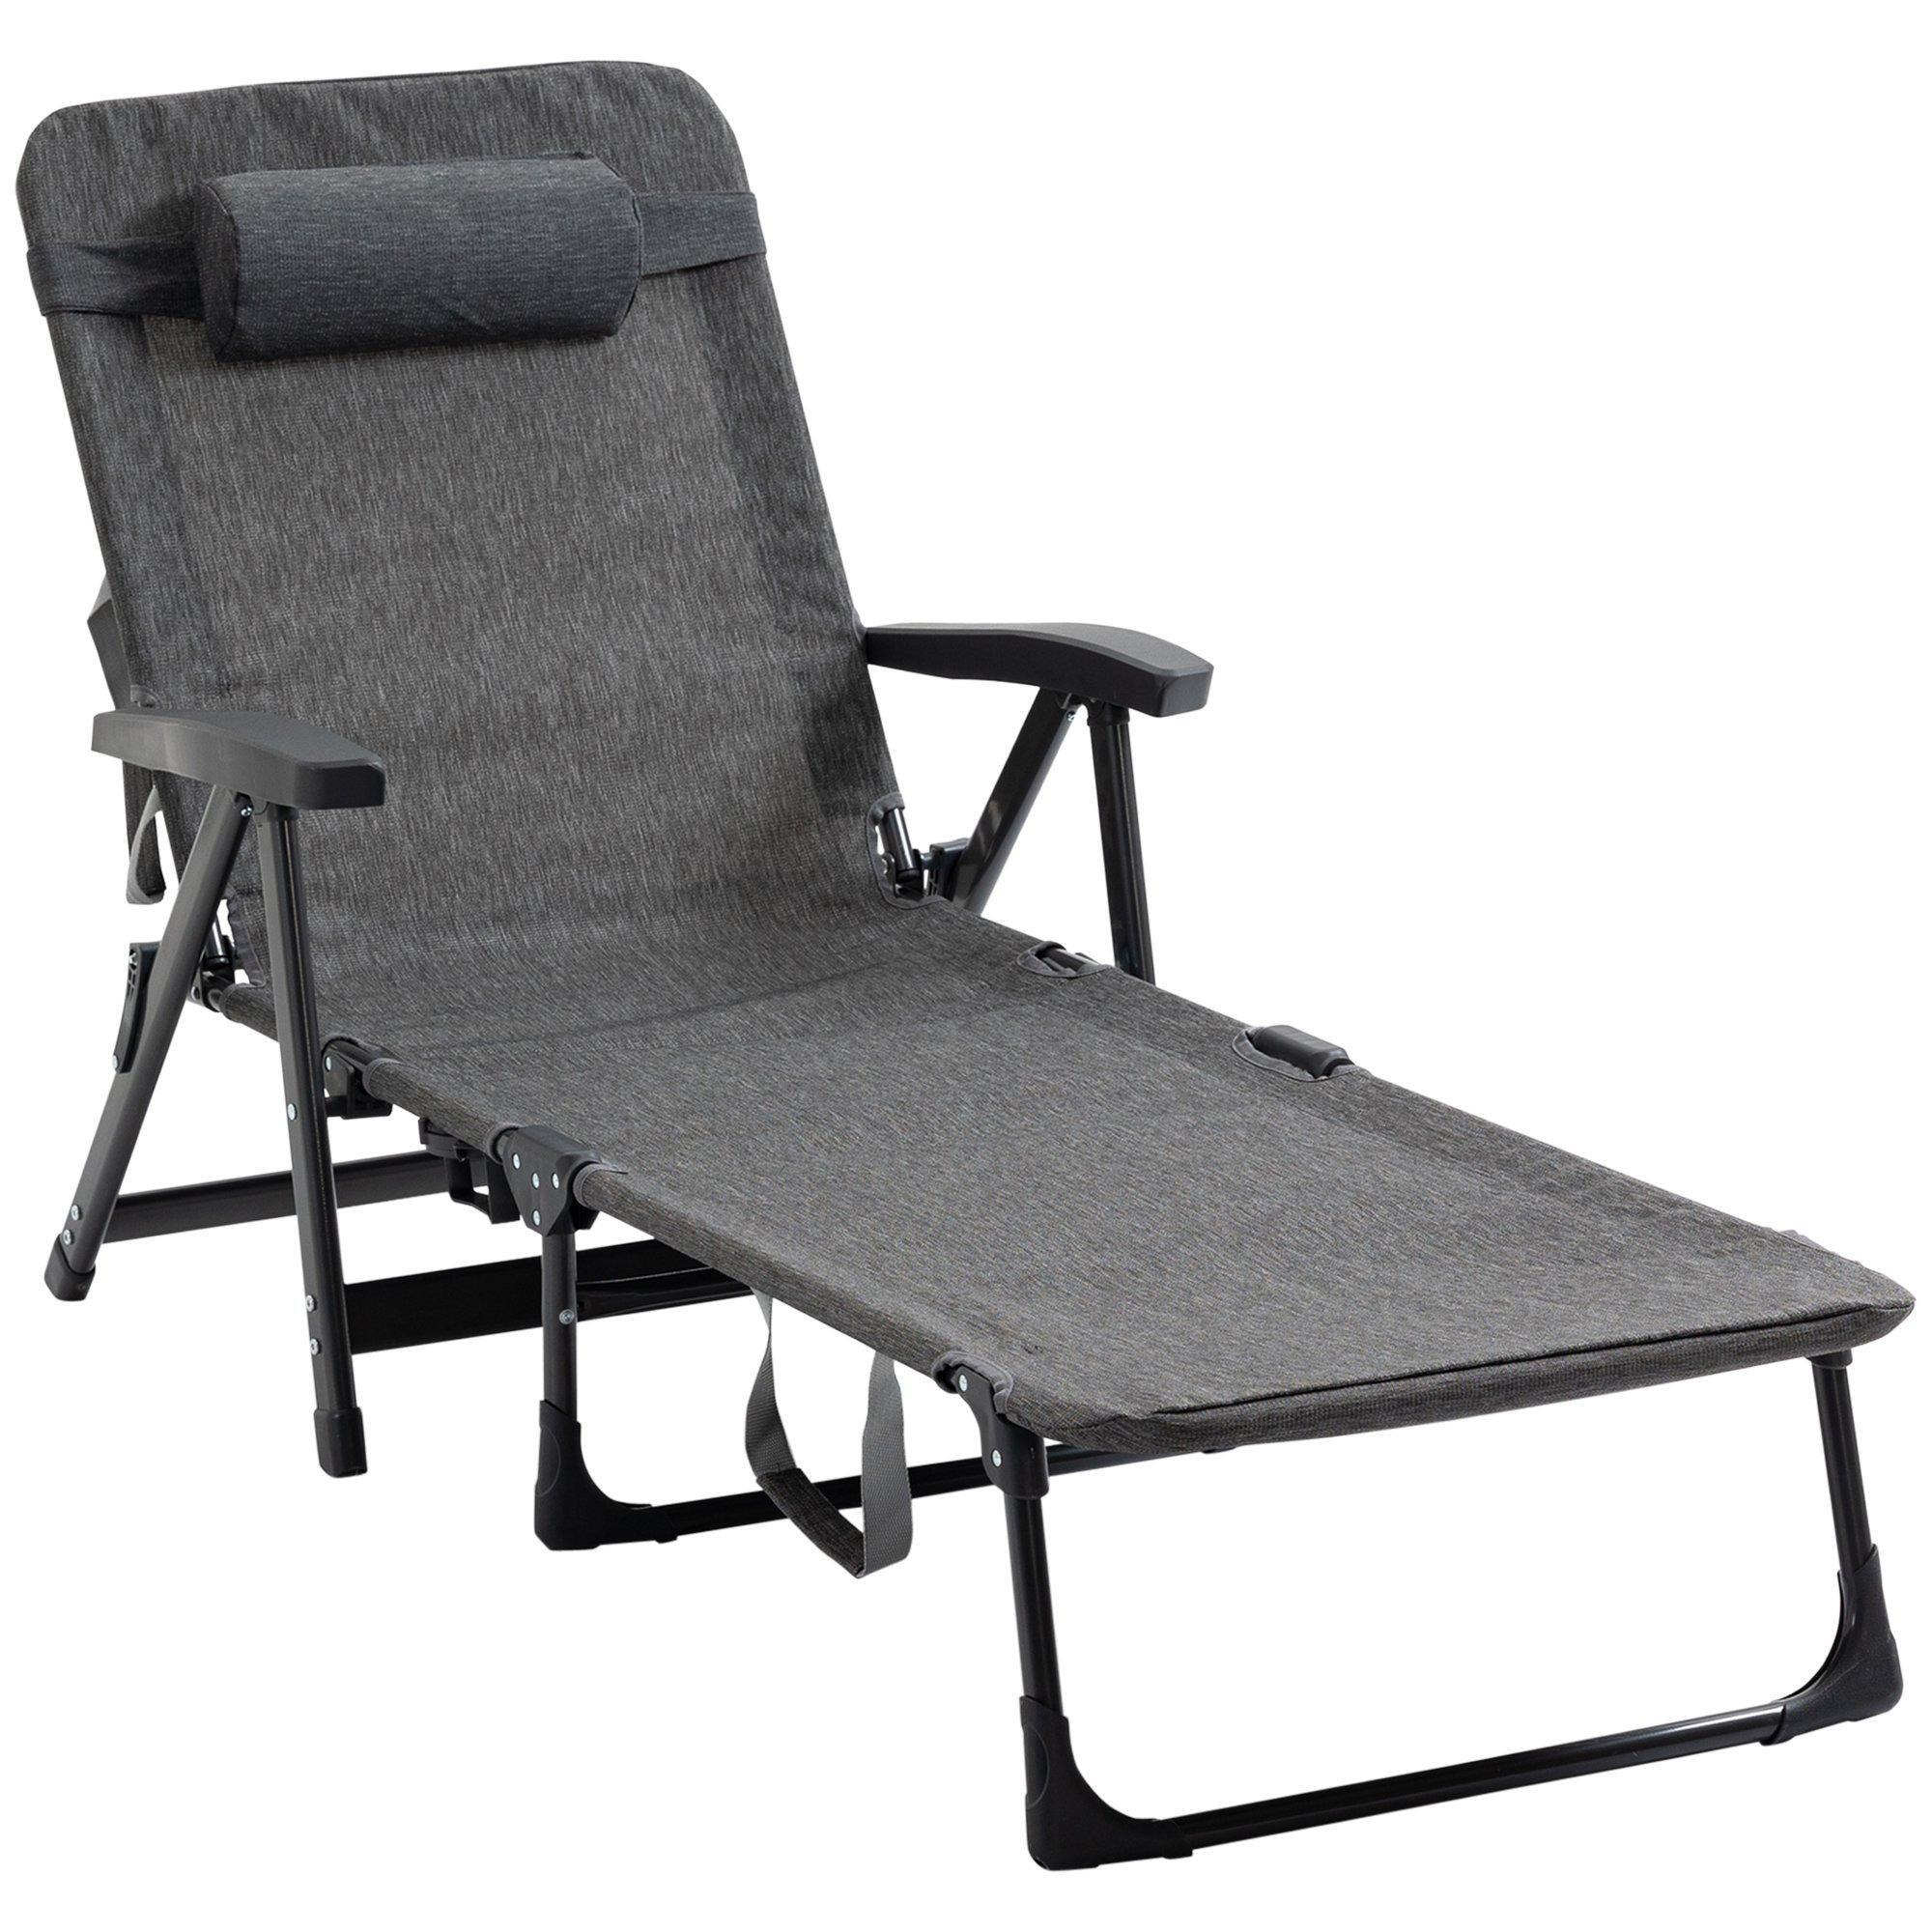 Folding Chaise Lounge, Garden Lounger Headrest Cup Holder - image 1